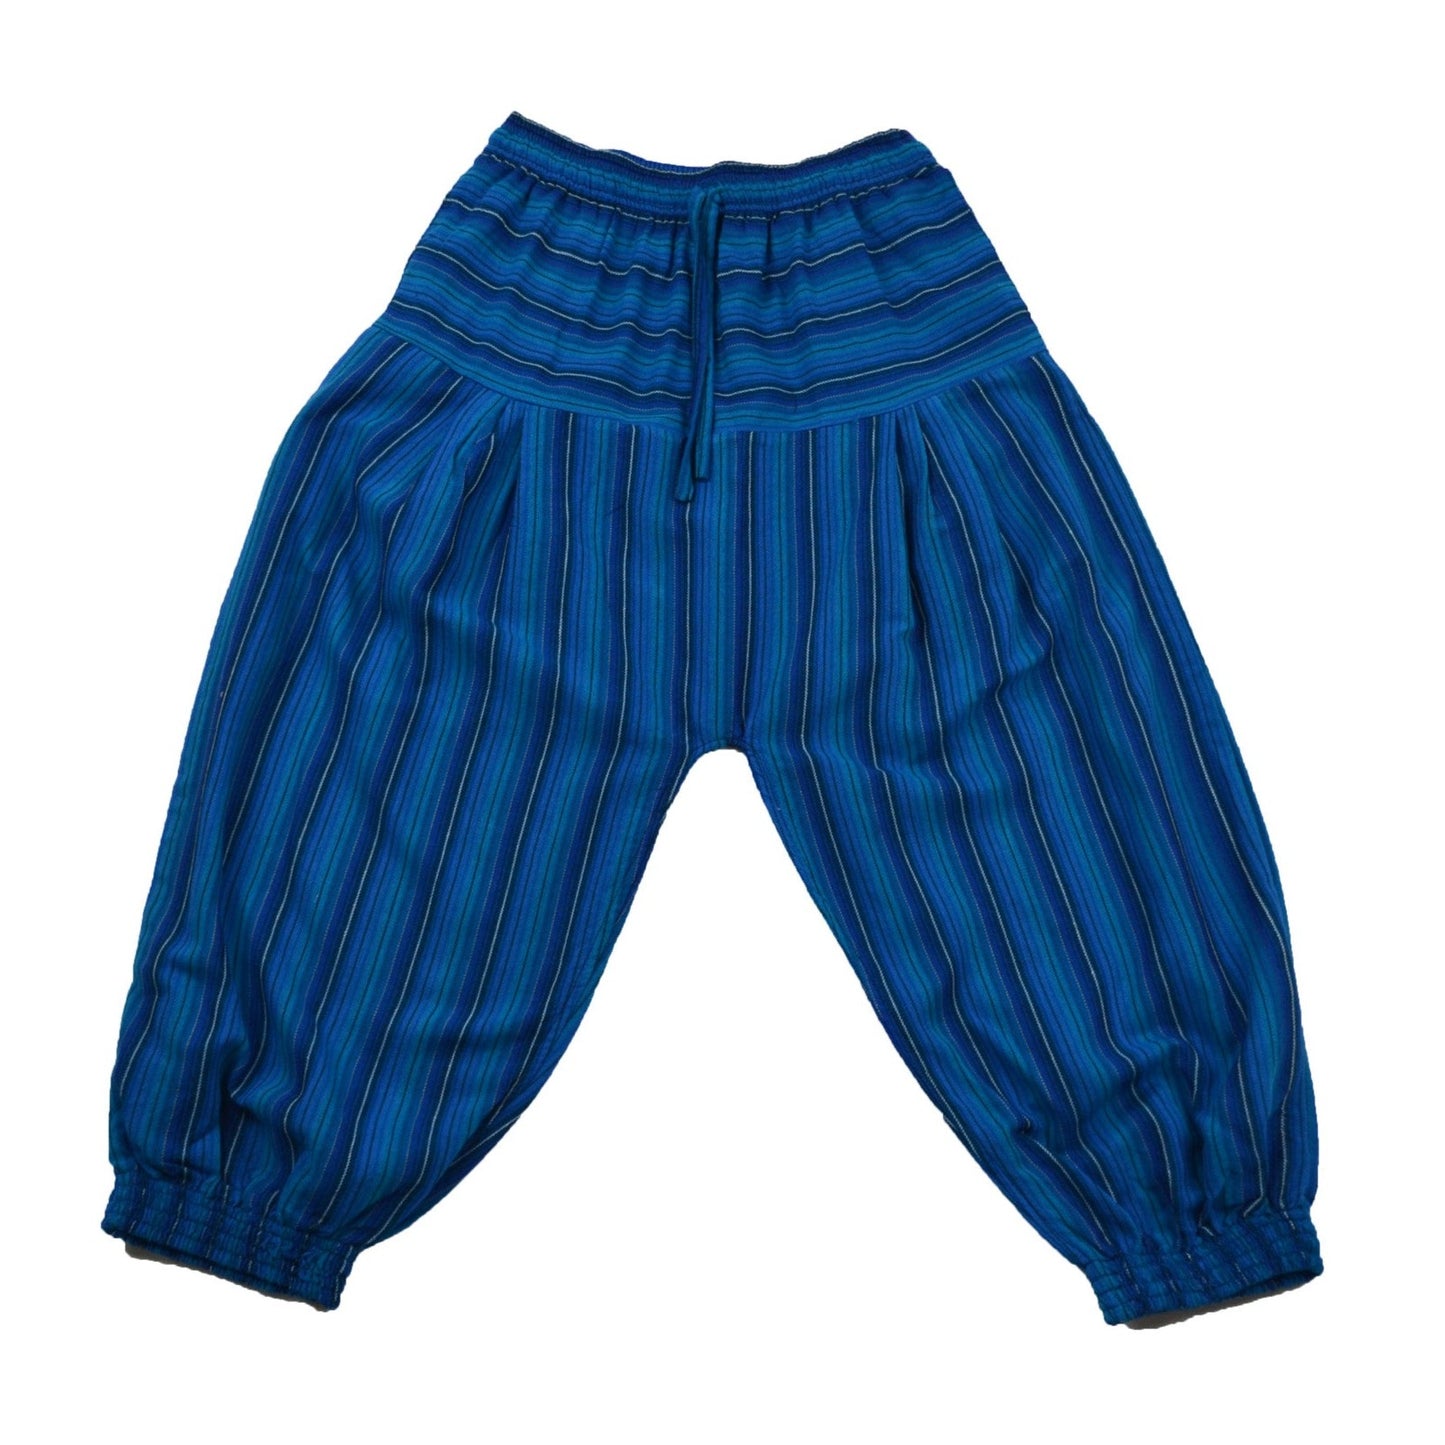 Ocean Blue Bohemian Youth Pants - Happy Pants